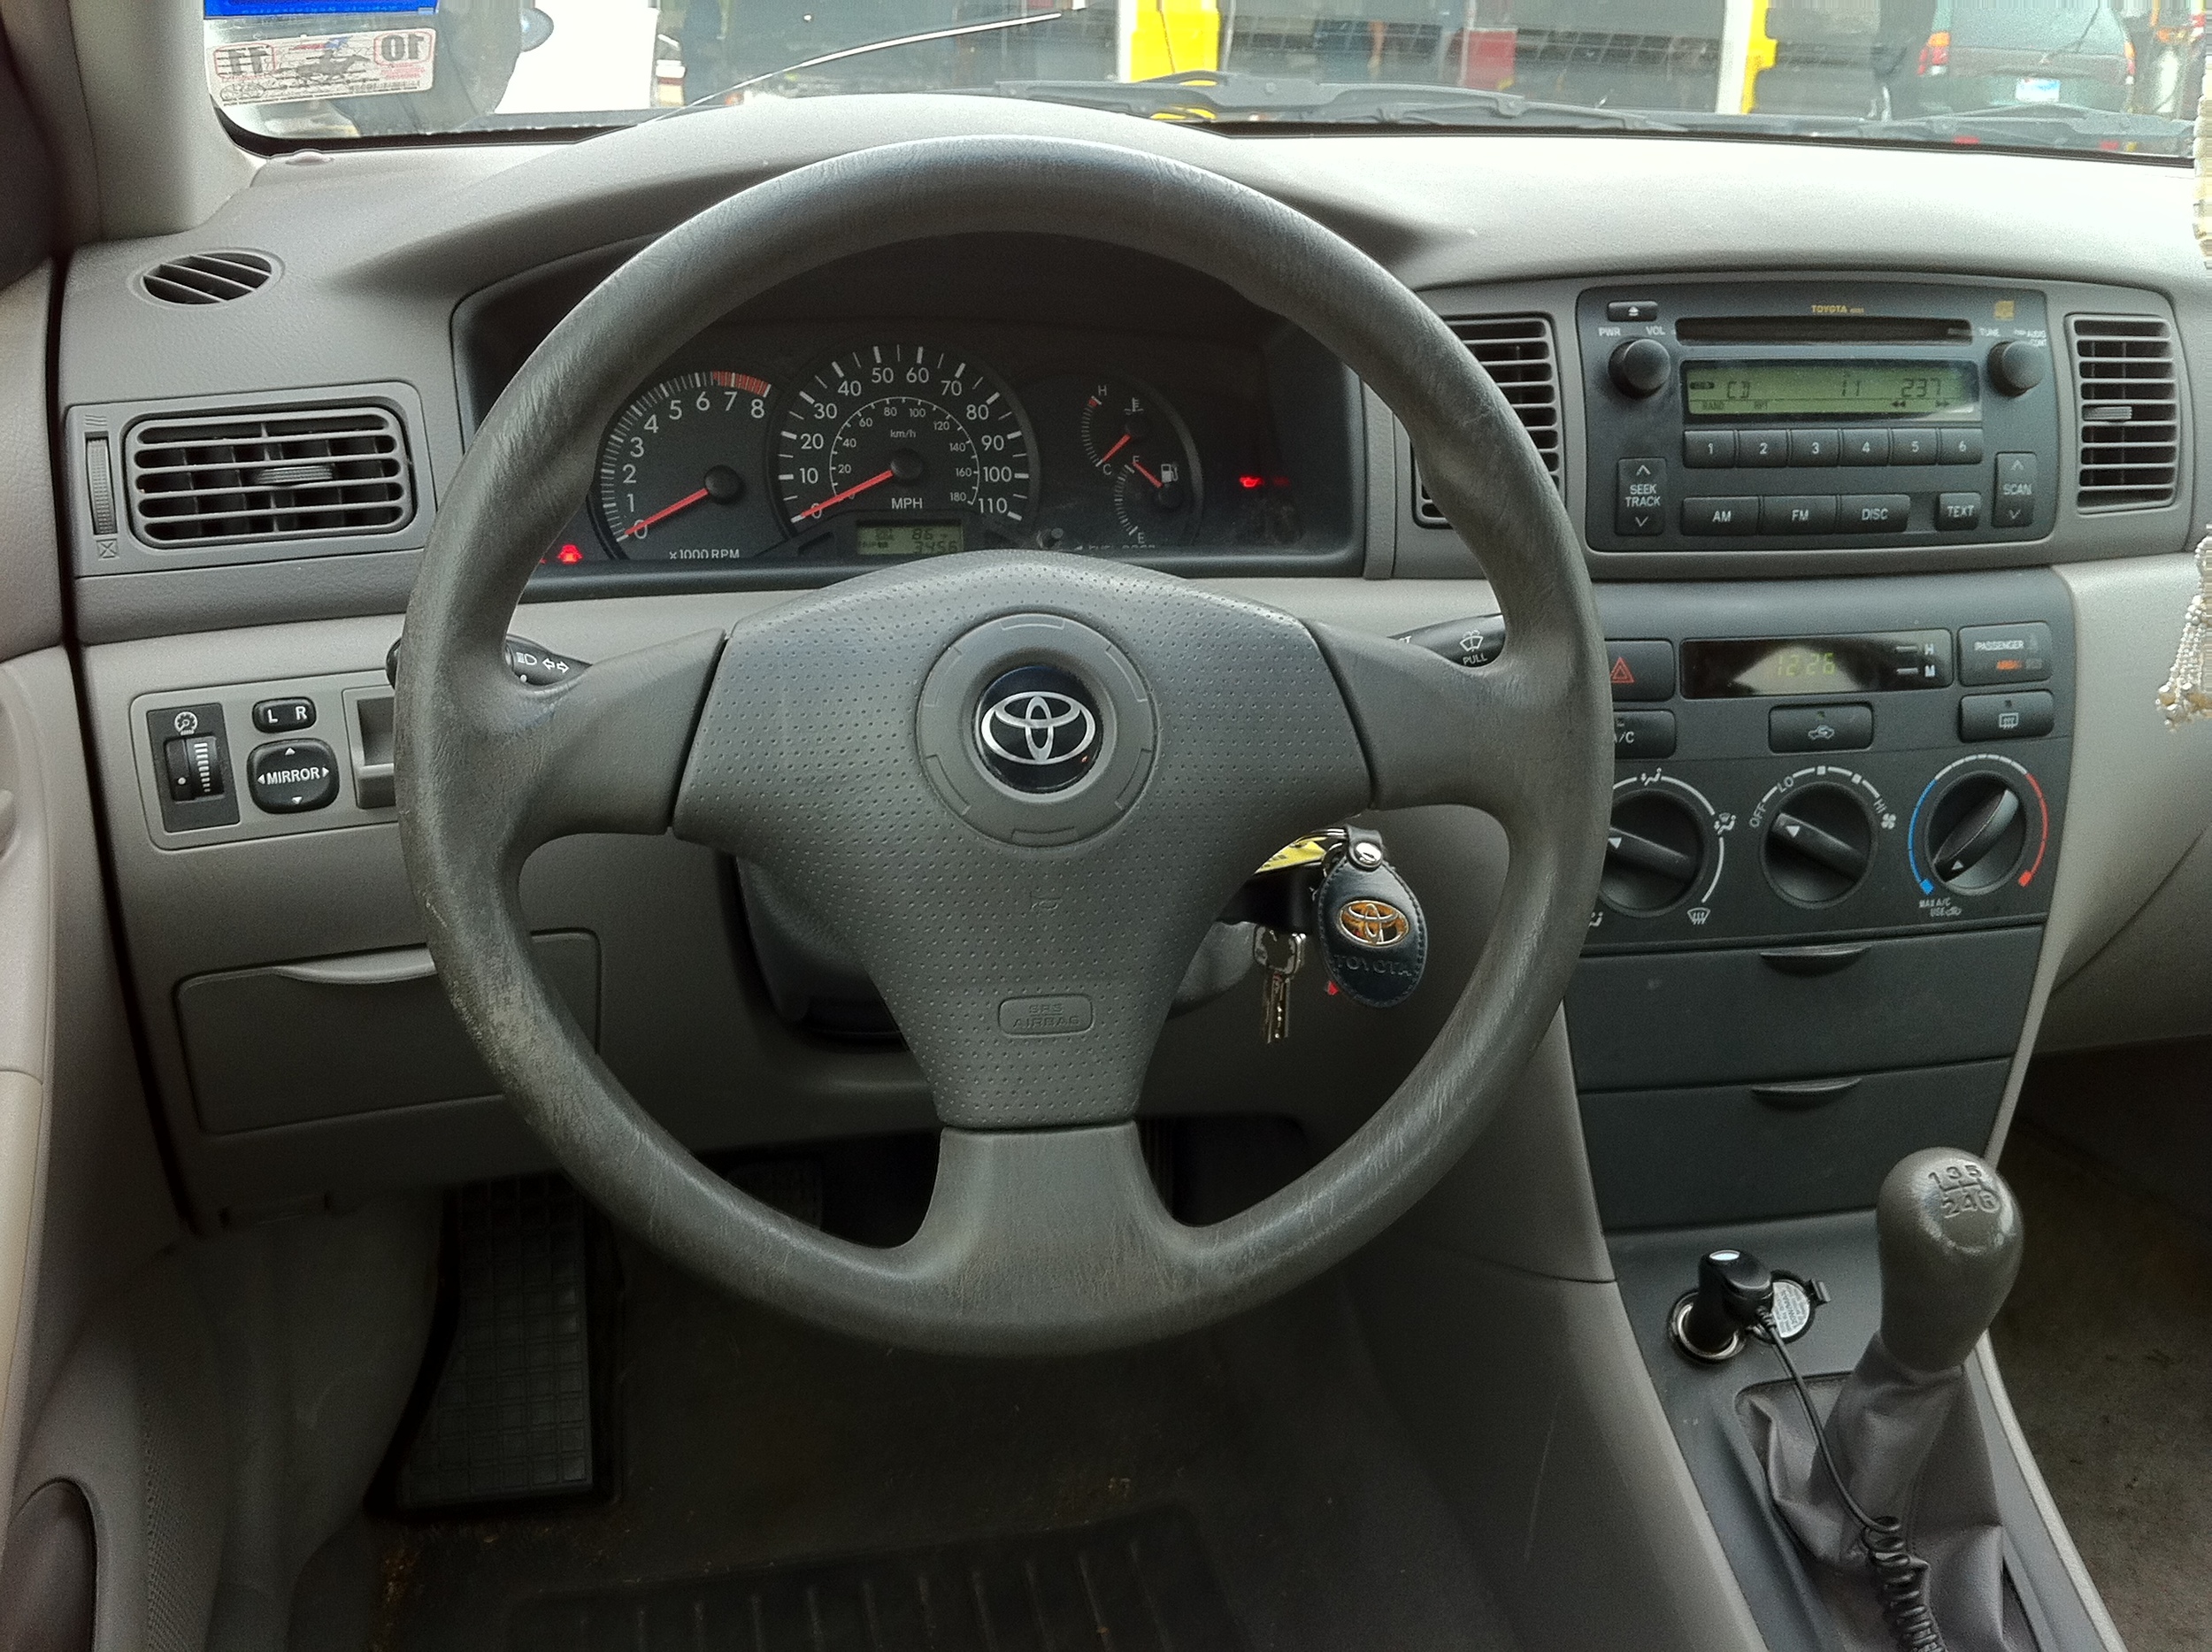 Why I Hate The Toyota Corolla Drivermod